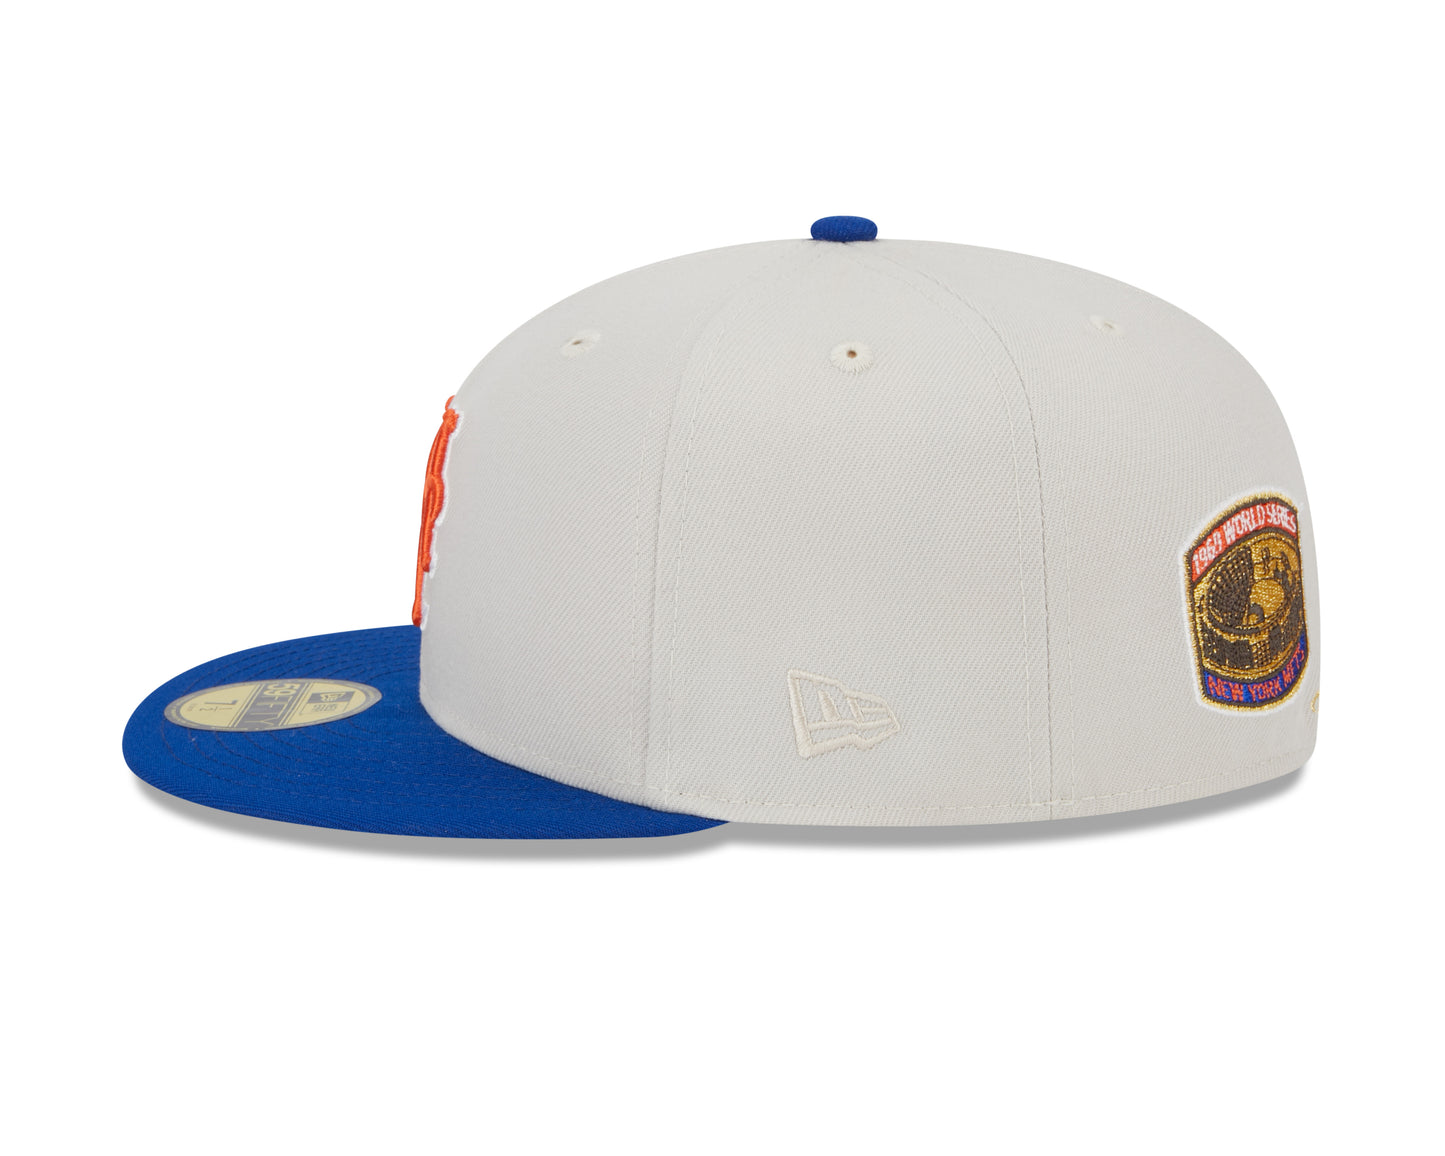 New Era - 5950 Fitted WORLDCLASS - New York Mets - Stone/Blue - Headz Up 